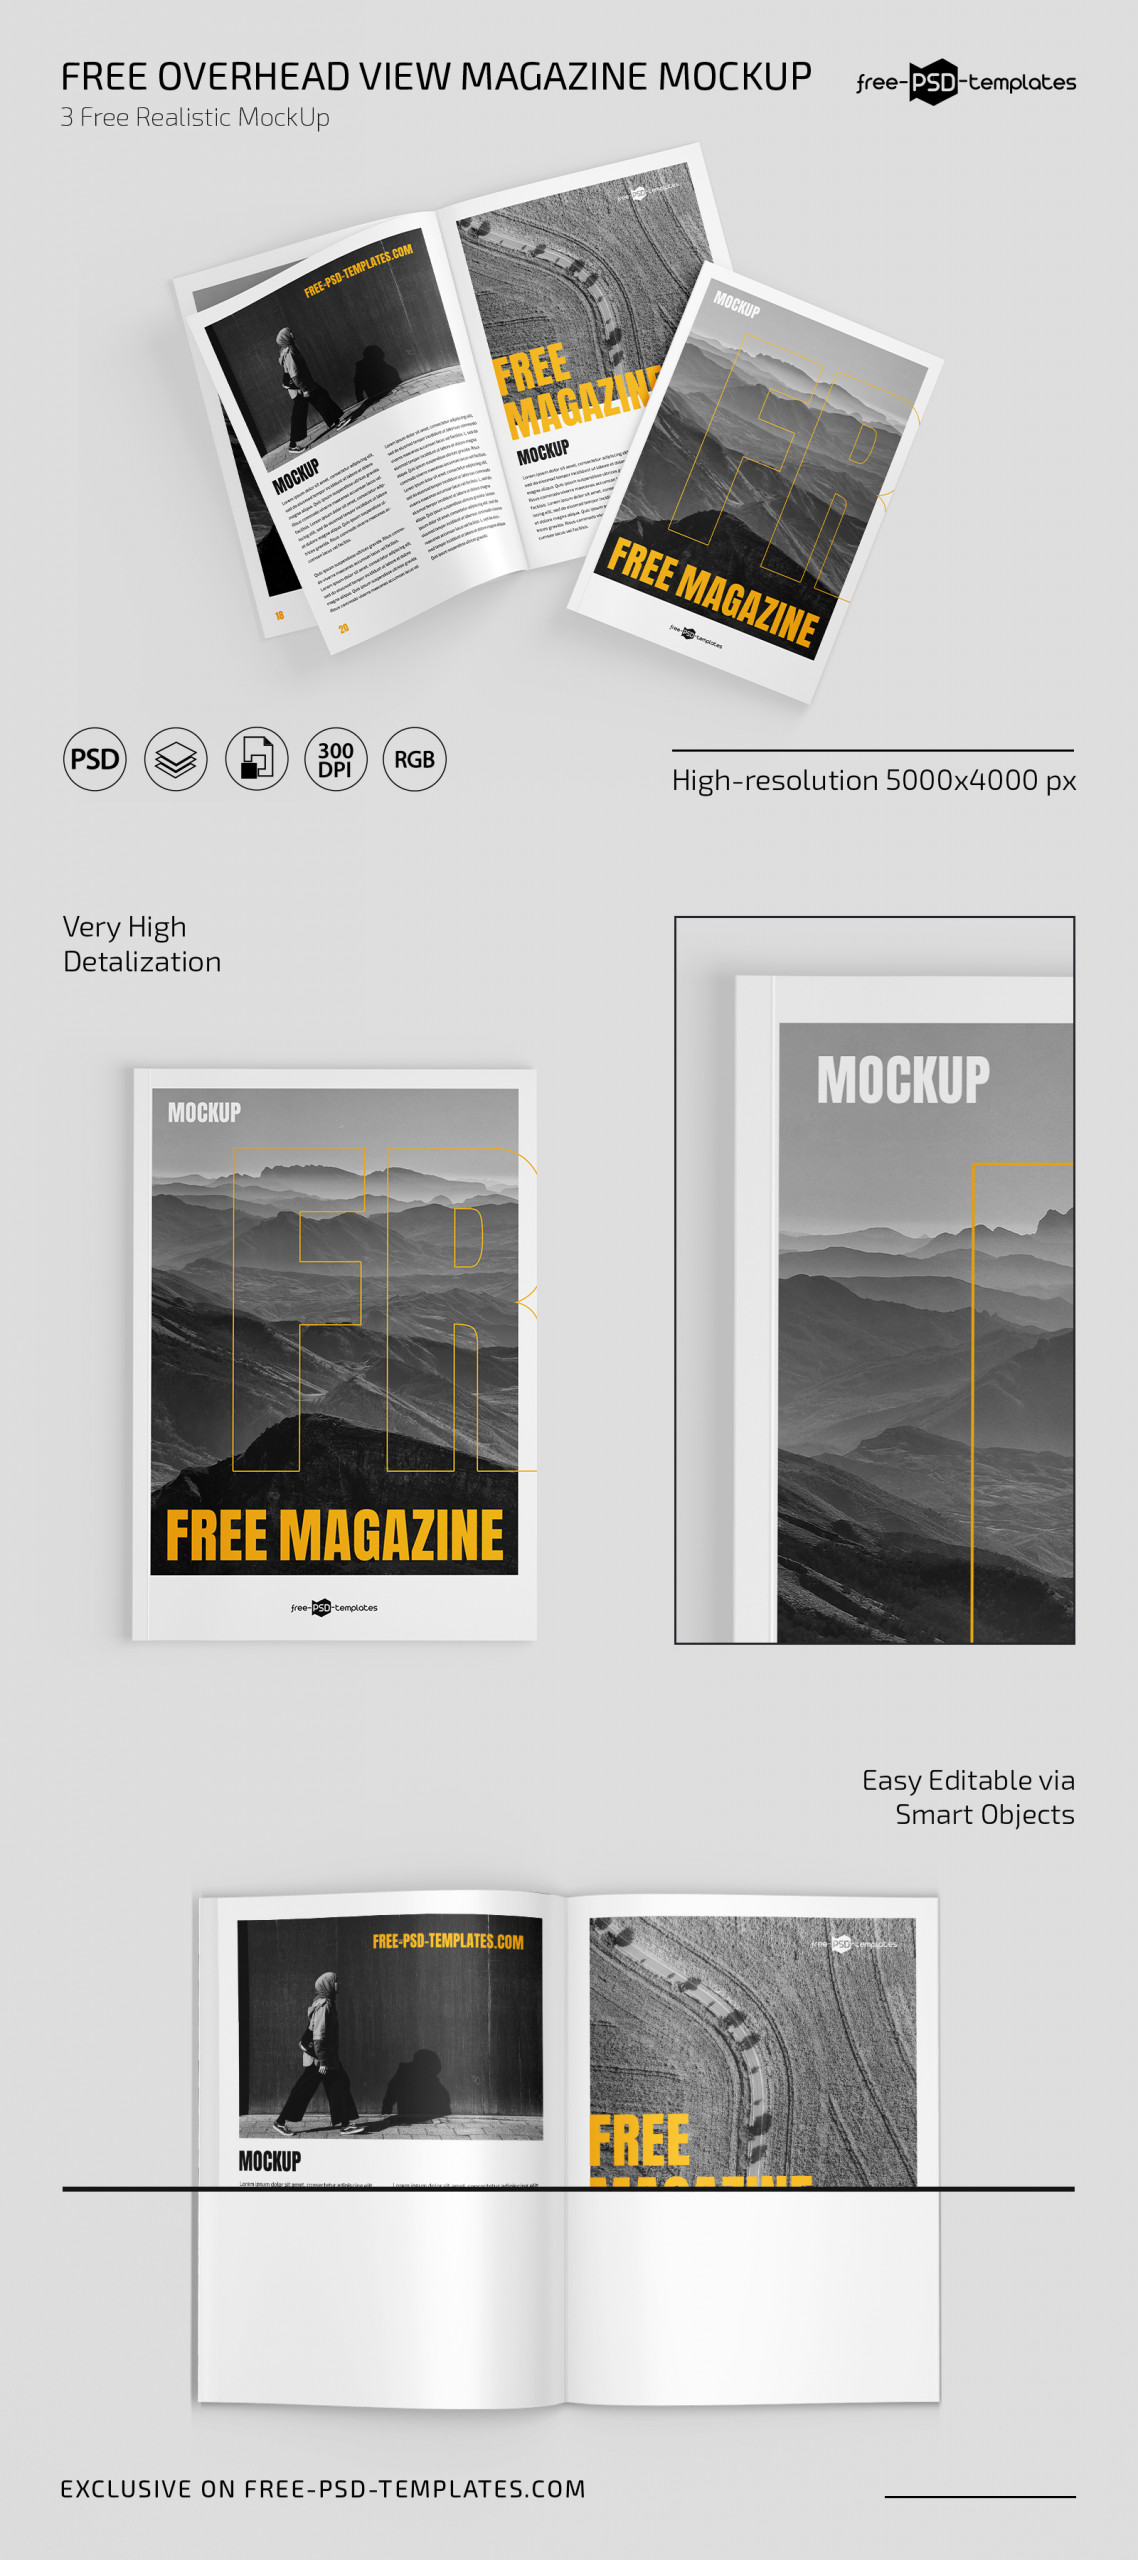 Web Pv Free Overhead View Magazine Mockup scaled